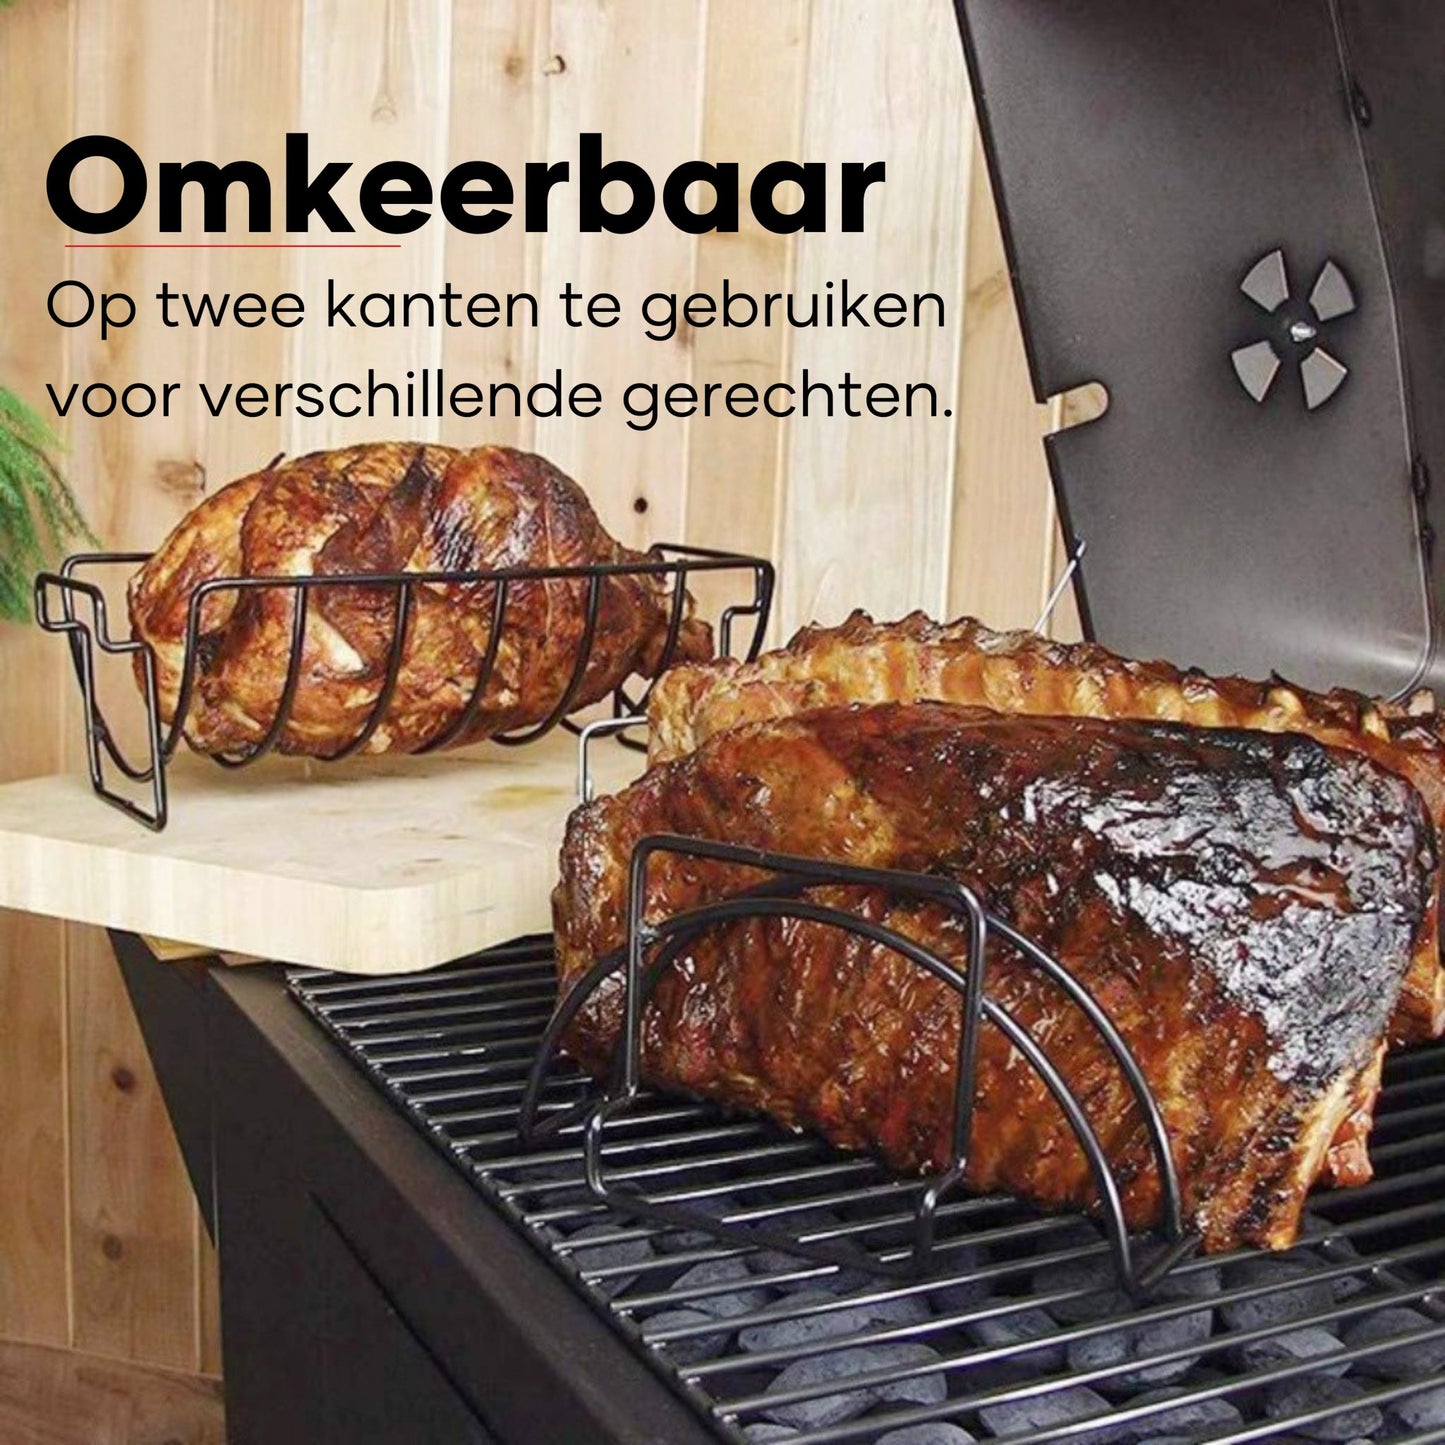 PROKING Sparerib Barbecue Rek – BBQ Accessoires – Inclusief Sparerib Recept – Anti-aanbak lag – 35 x 19.5 x 11.5 CM - PROKING